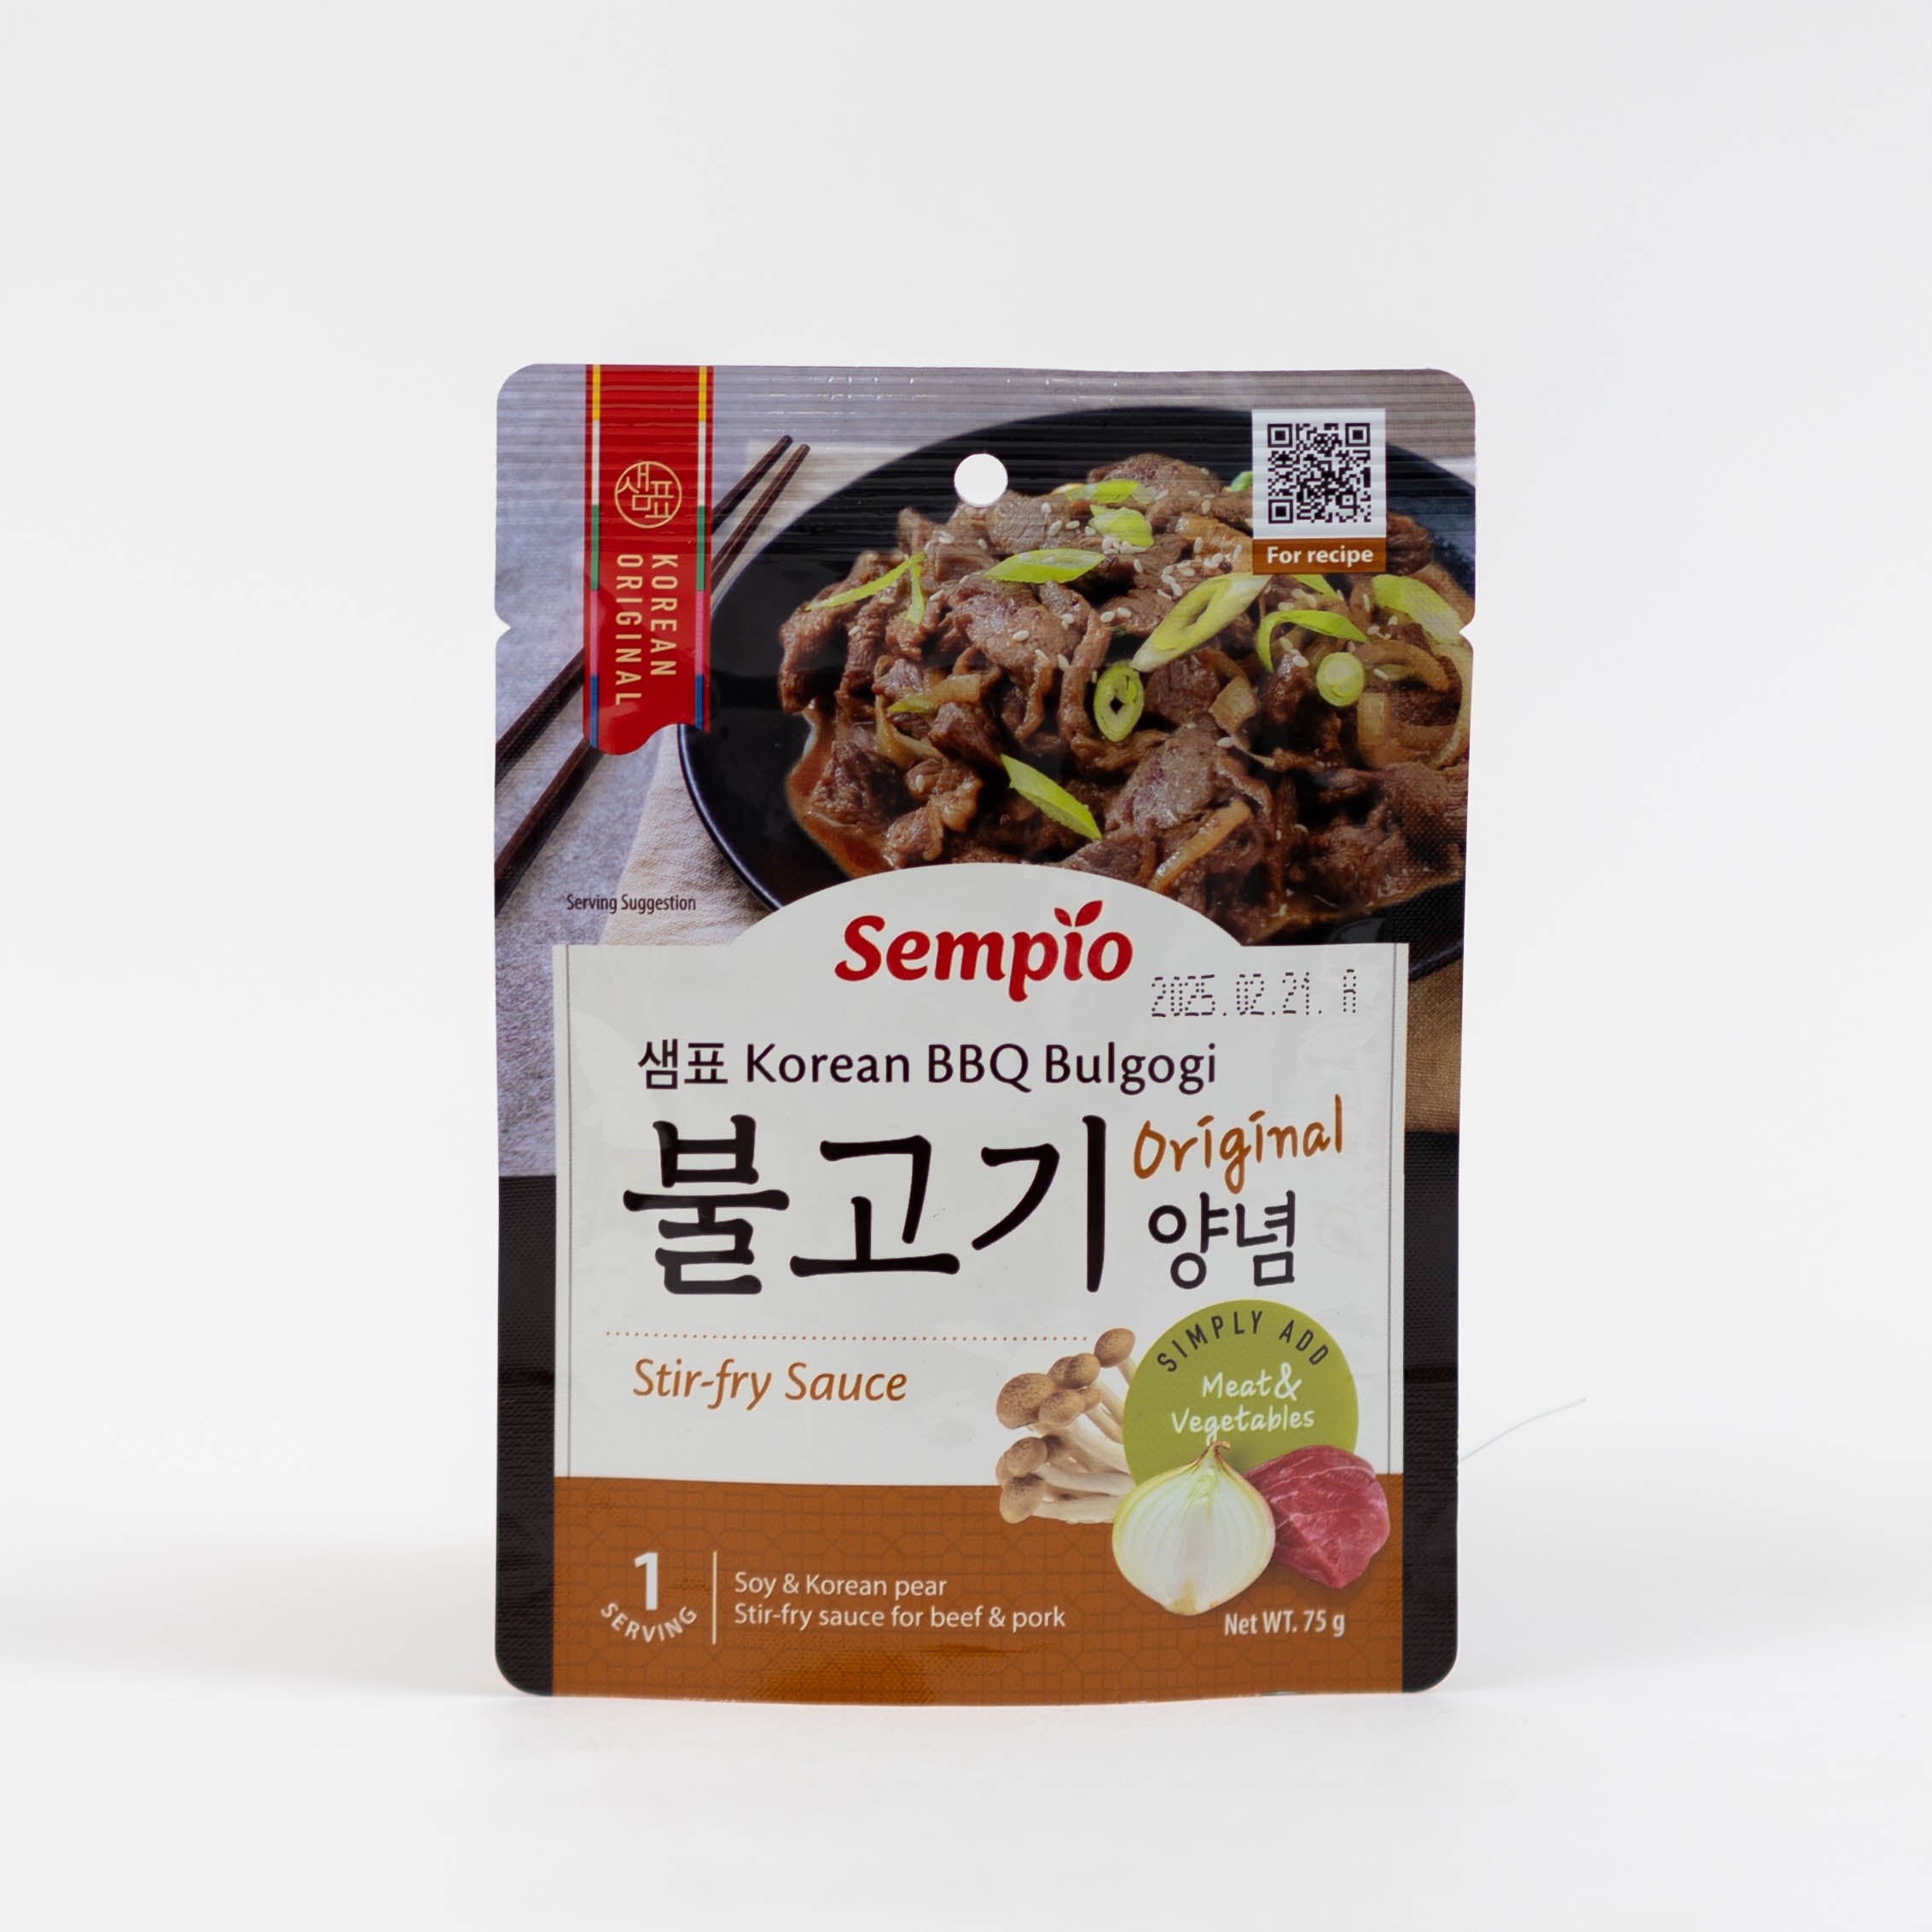 onlineshop dinese.de asiashop asia shop sempio korean bbq bulgogi stir fry sauce asiatische soßen lebensmittel